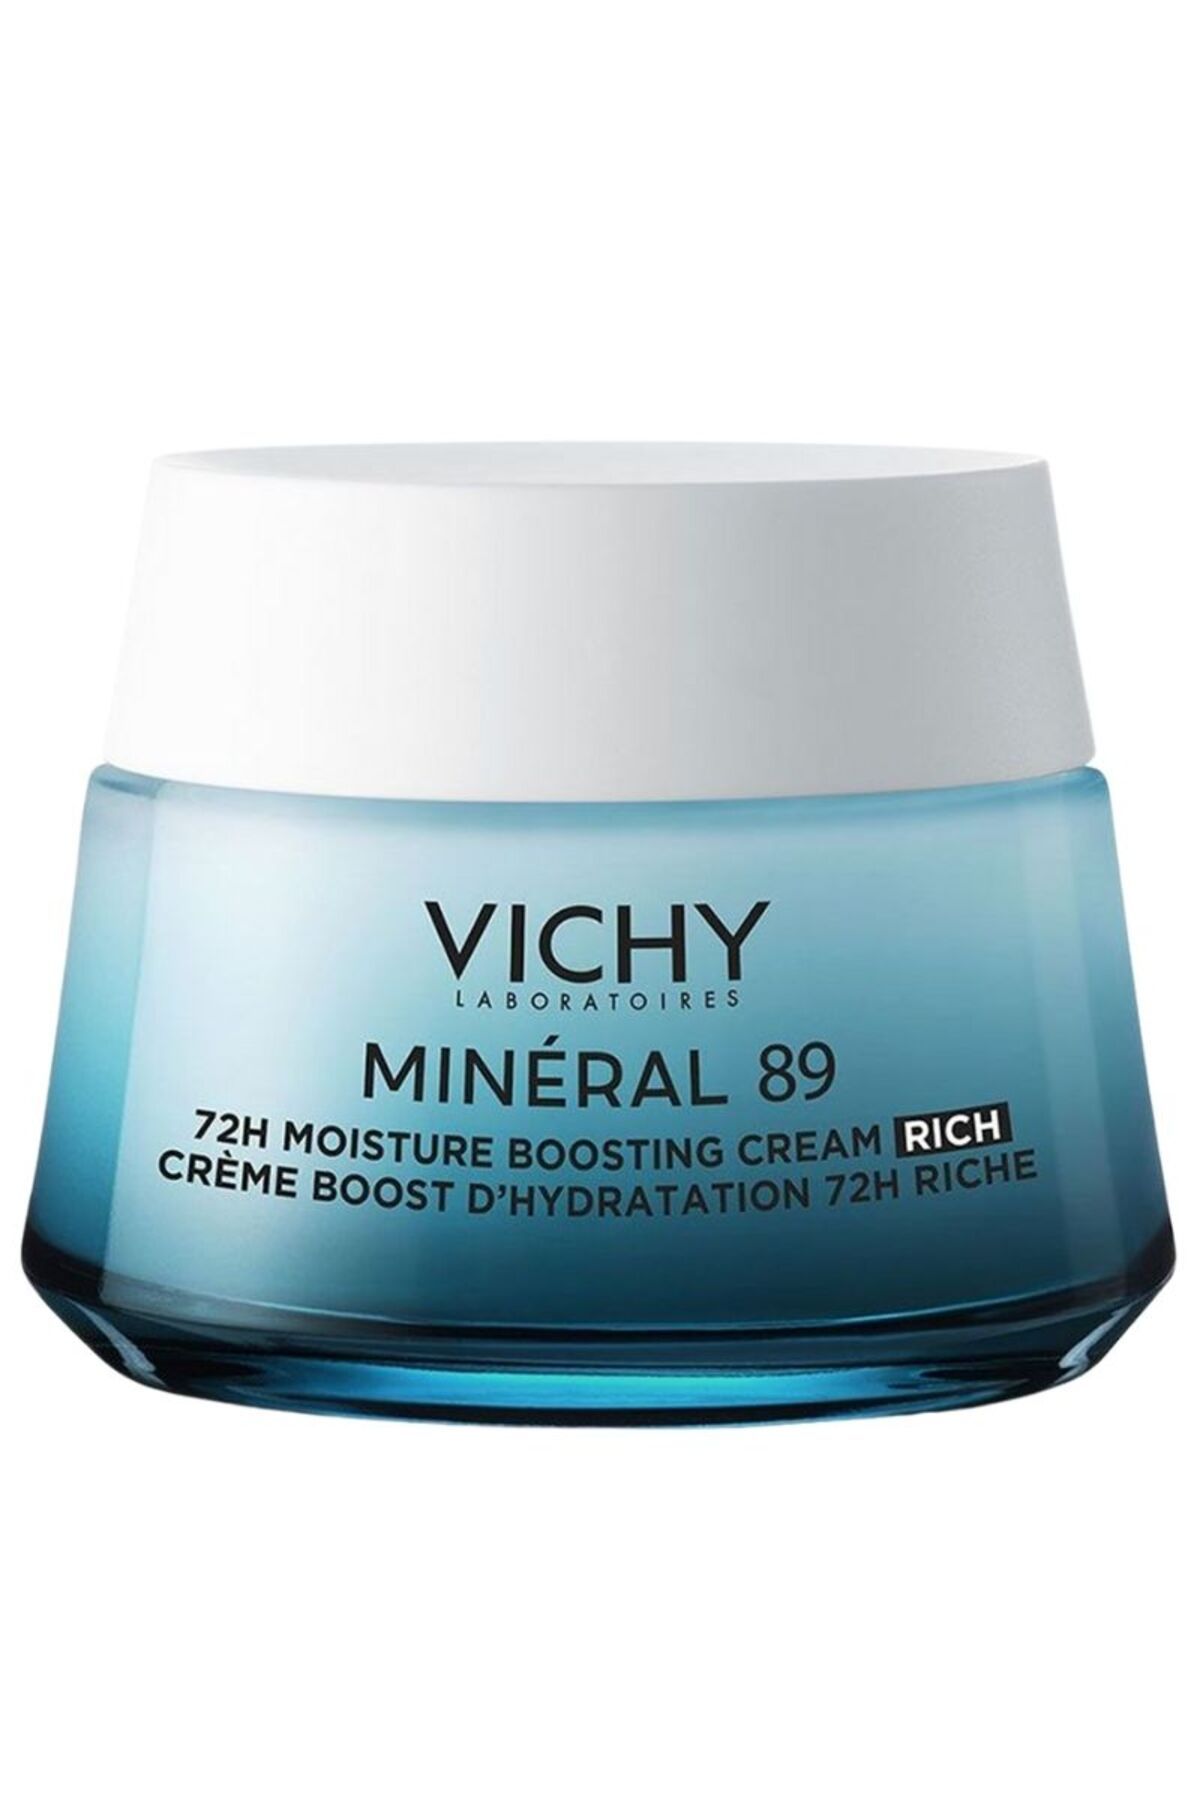 Vichy کرم مرطوب کننده و آبرسان 72 ساعته Mineral 89 مناسب پوست خشک 50 میل